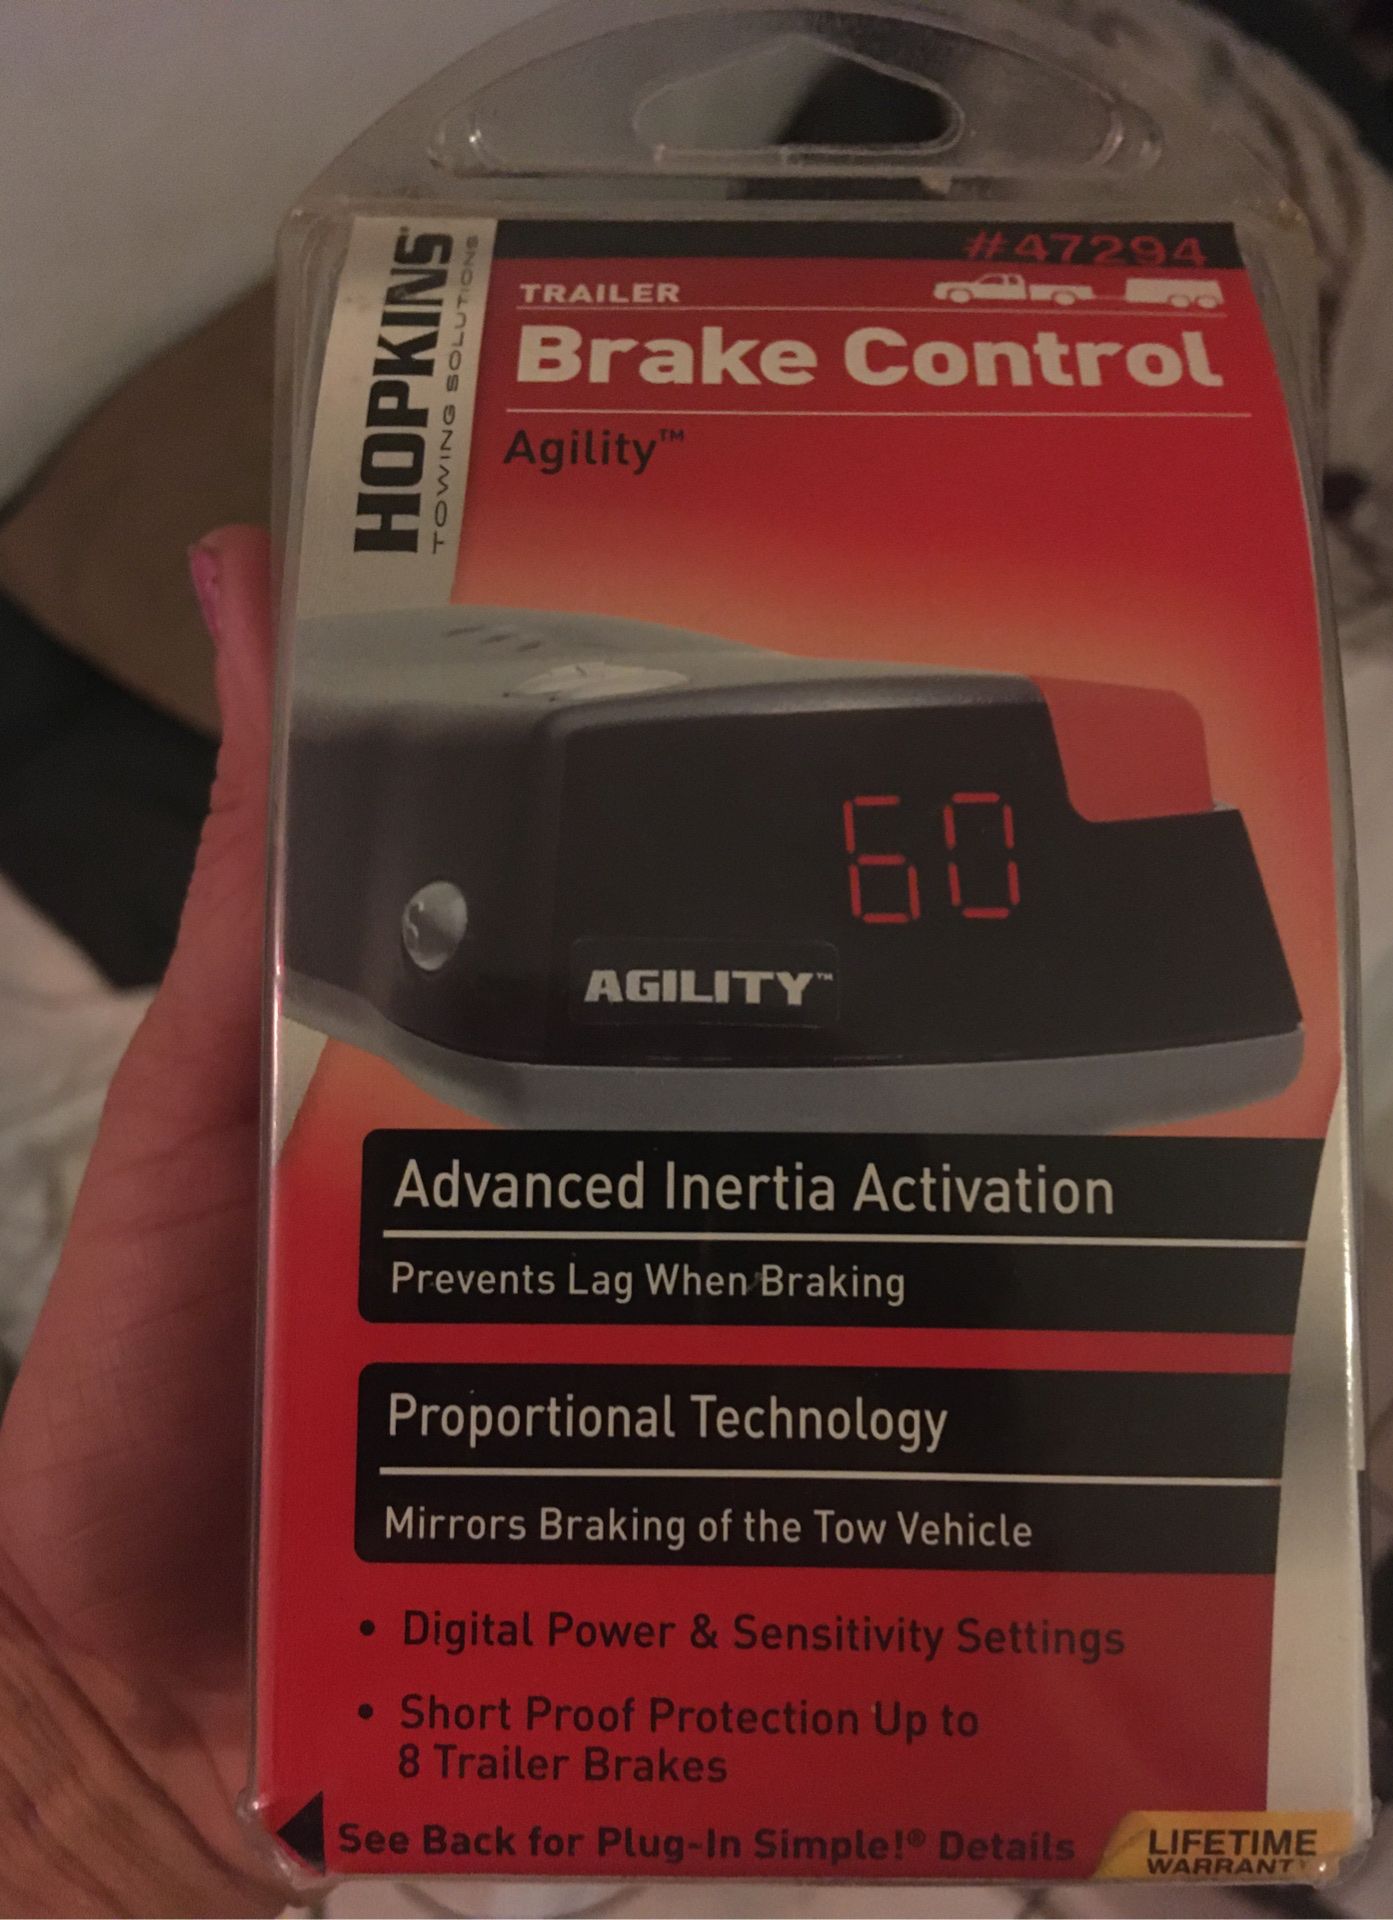 Trailer brake control